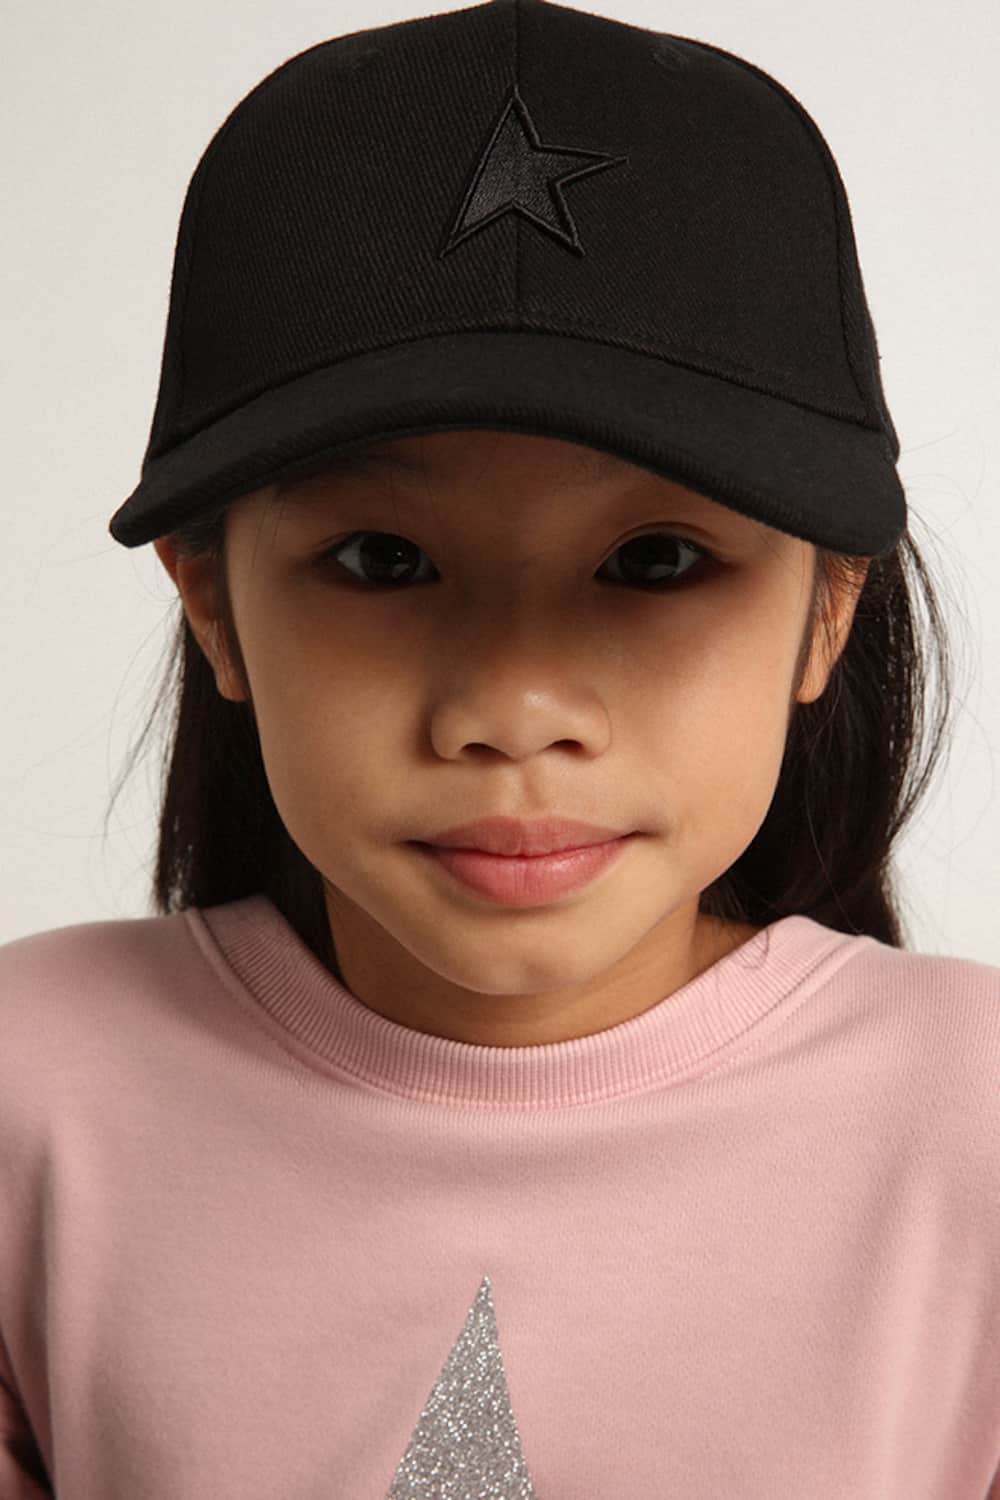 Golden Goose - Kids’ black baseball cap with star in 